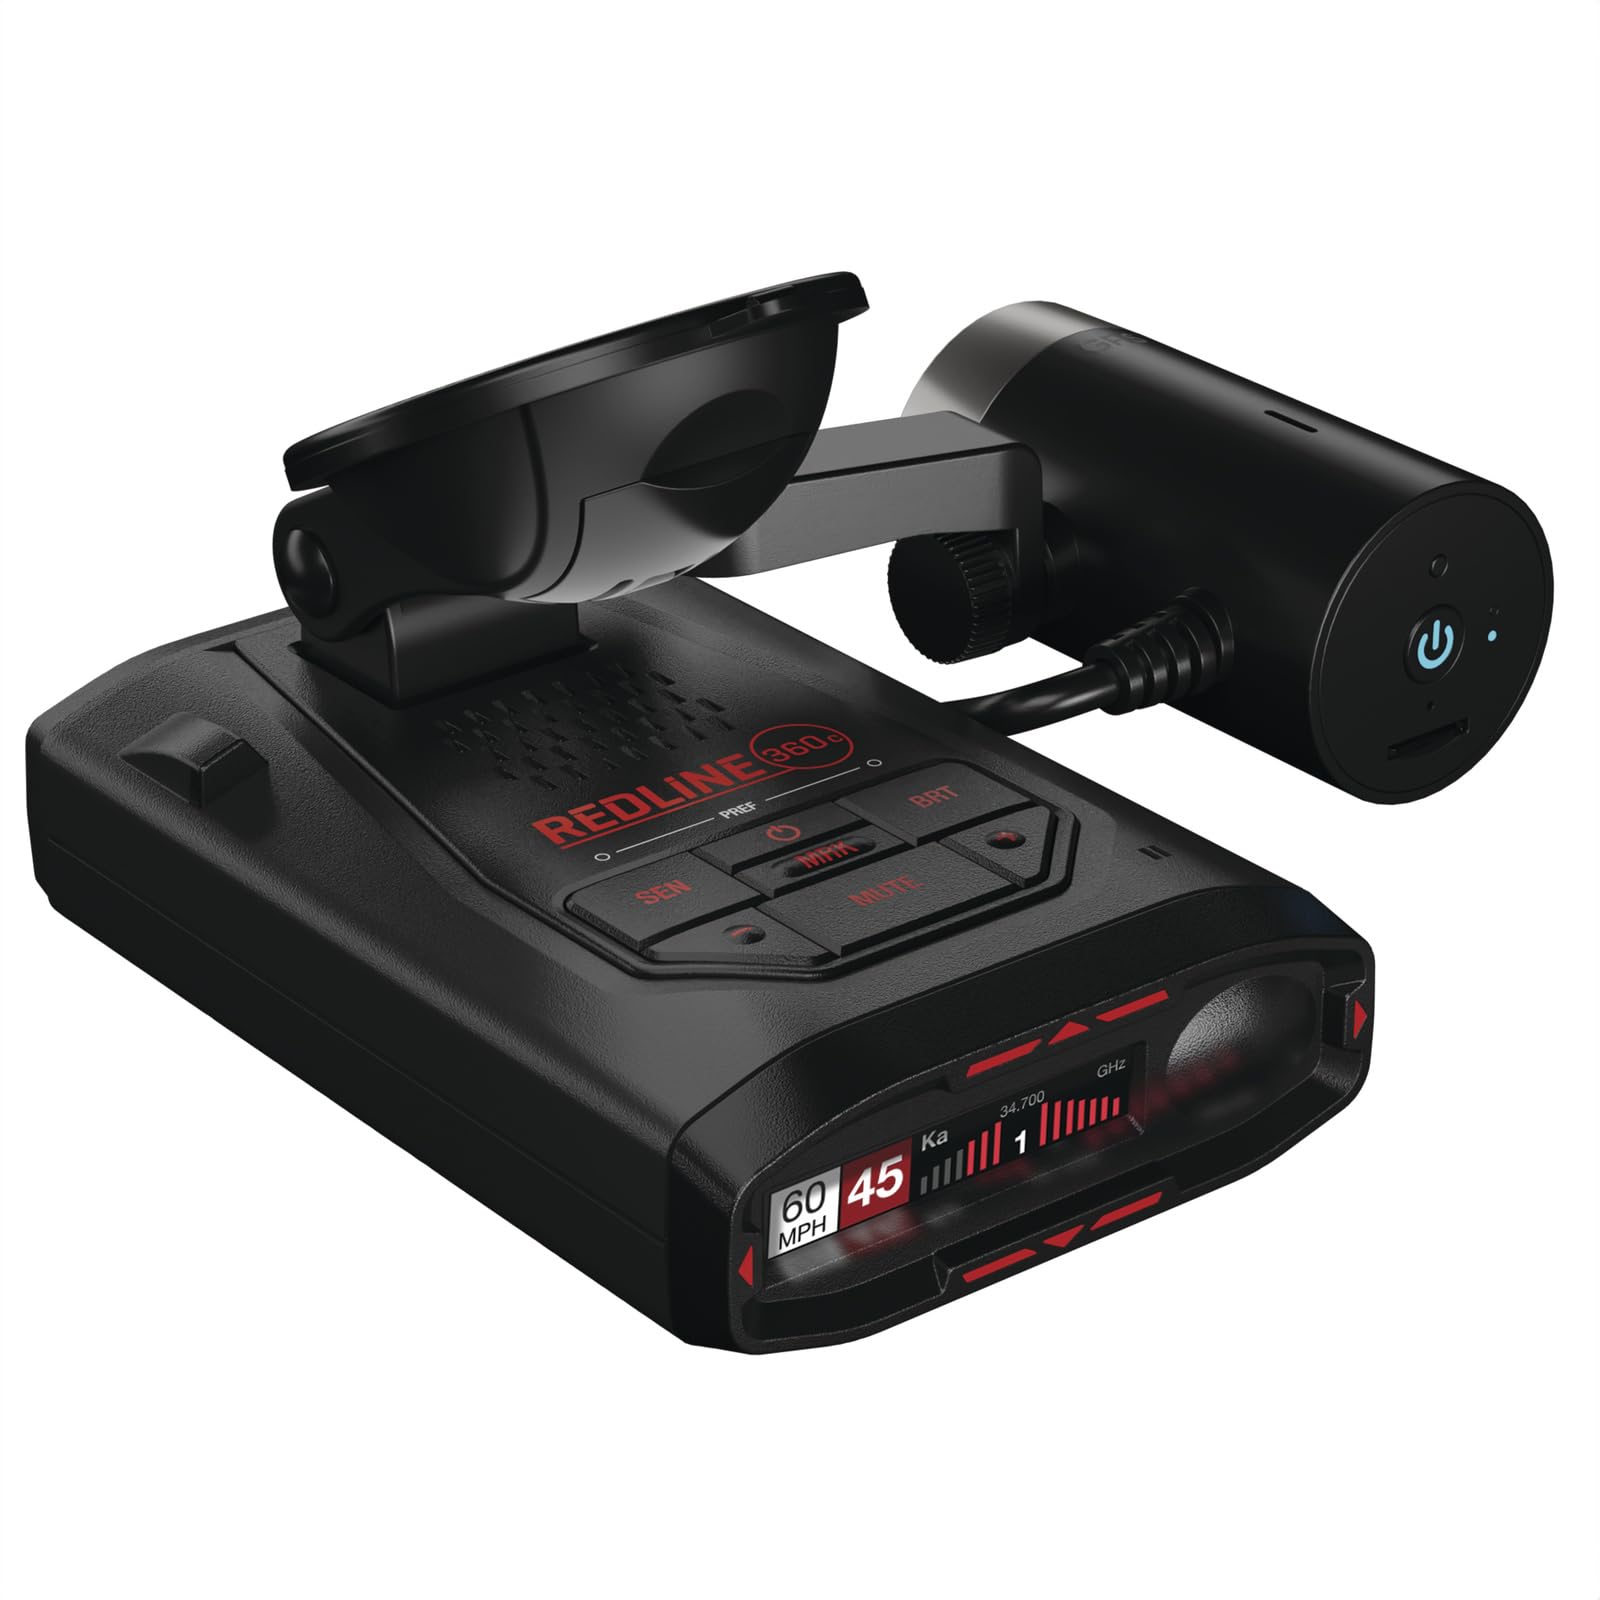 Escort Redline 360C Laser Radar Detector & Escort M2 Smart Dash Cam Bundle - 1080P Full HD Video, Extreme Range, AI Assisted Filtering, Built-in WiFi, GPS Based and Escort Live App, 0100057-1